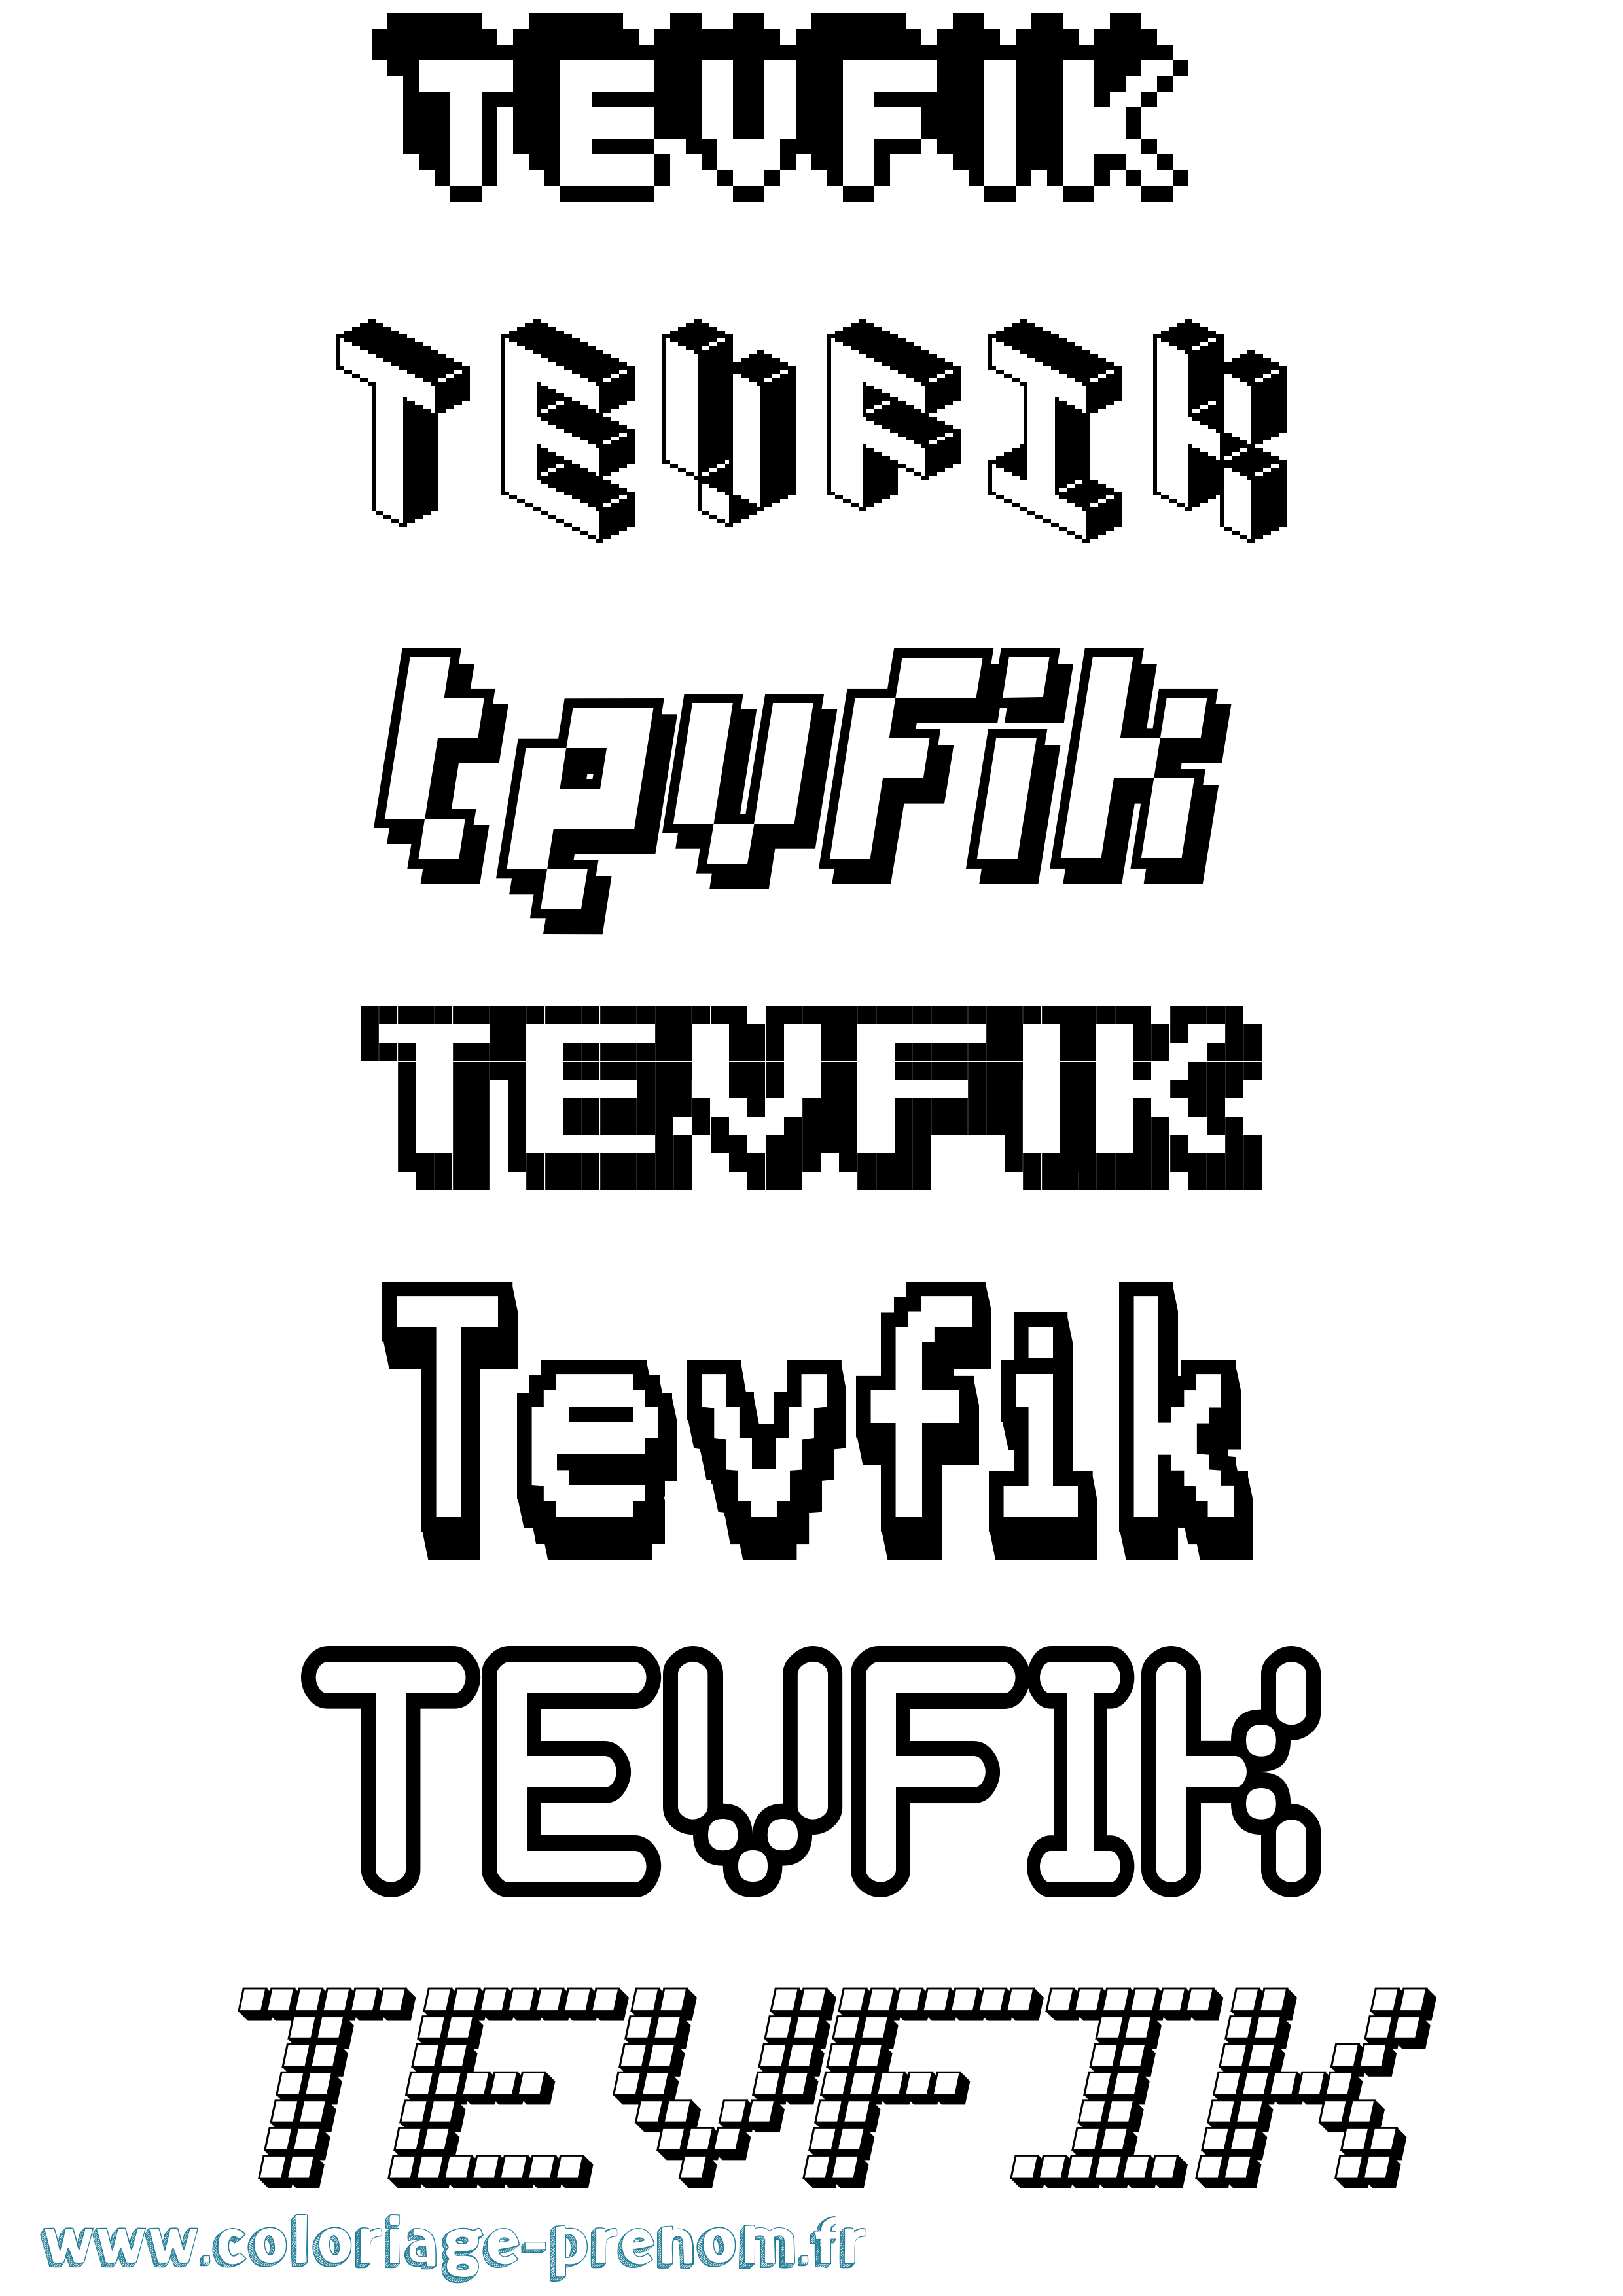 Coloriage prénom Tevfik Pixel